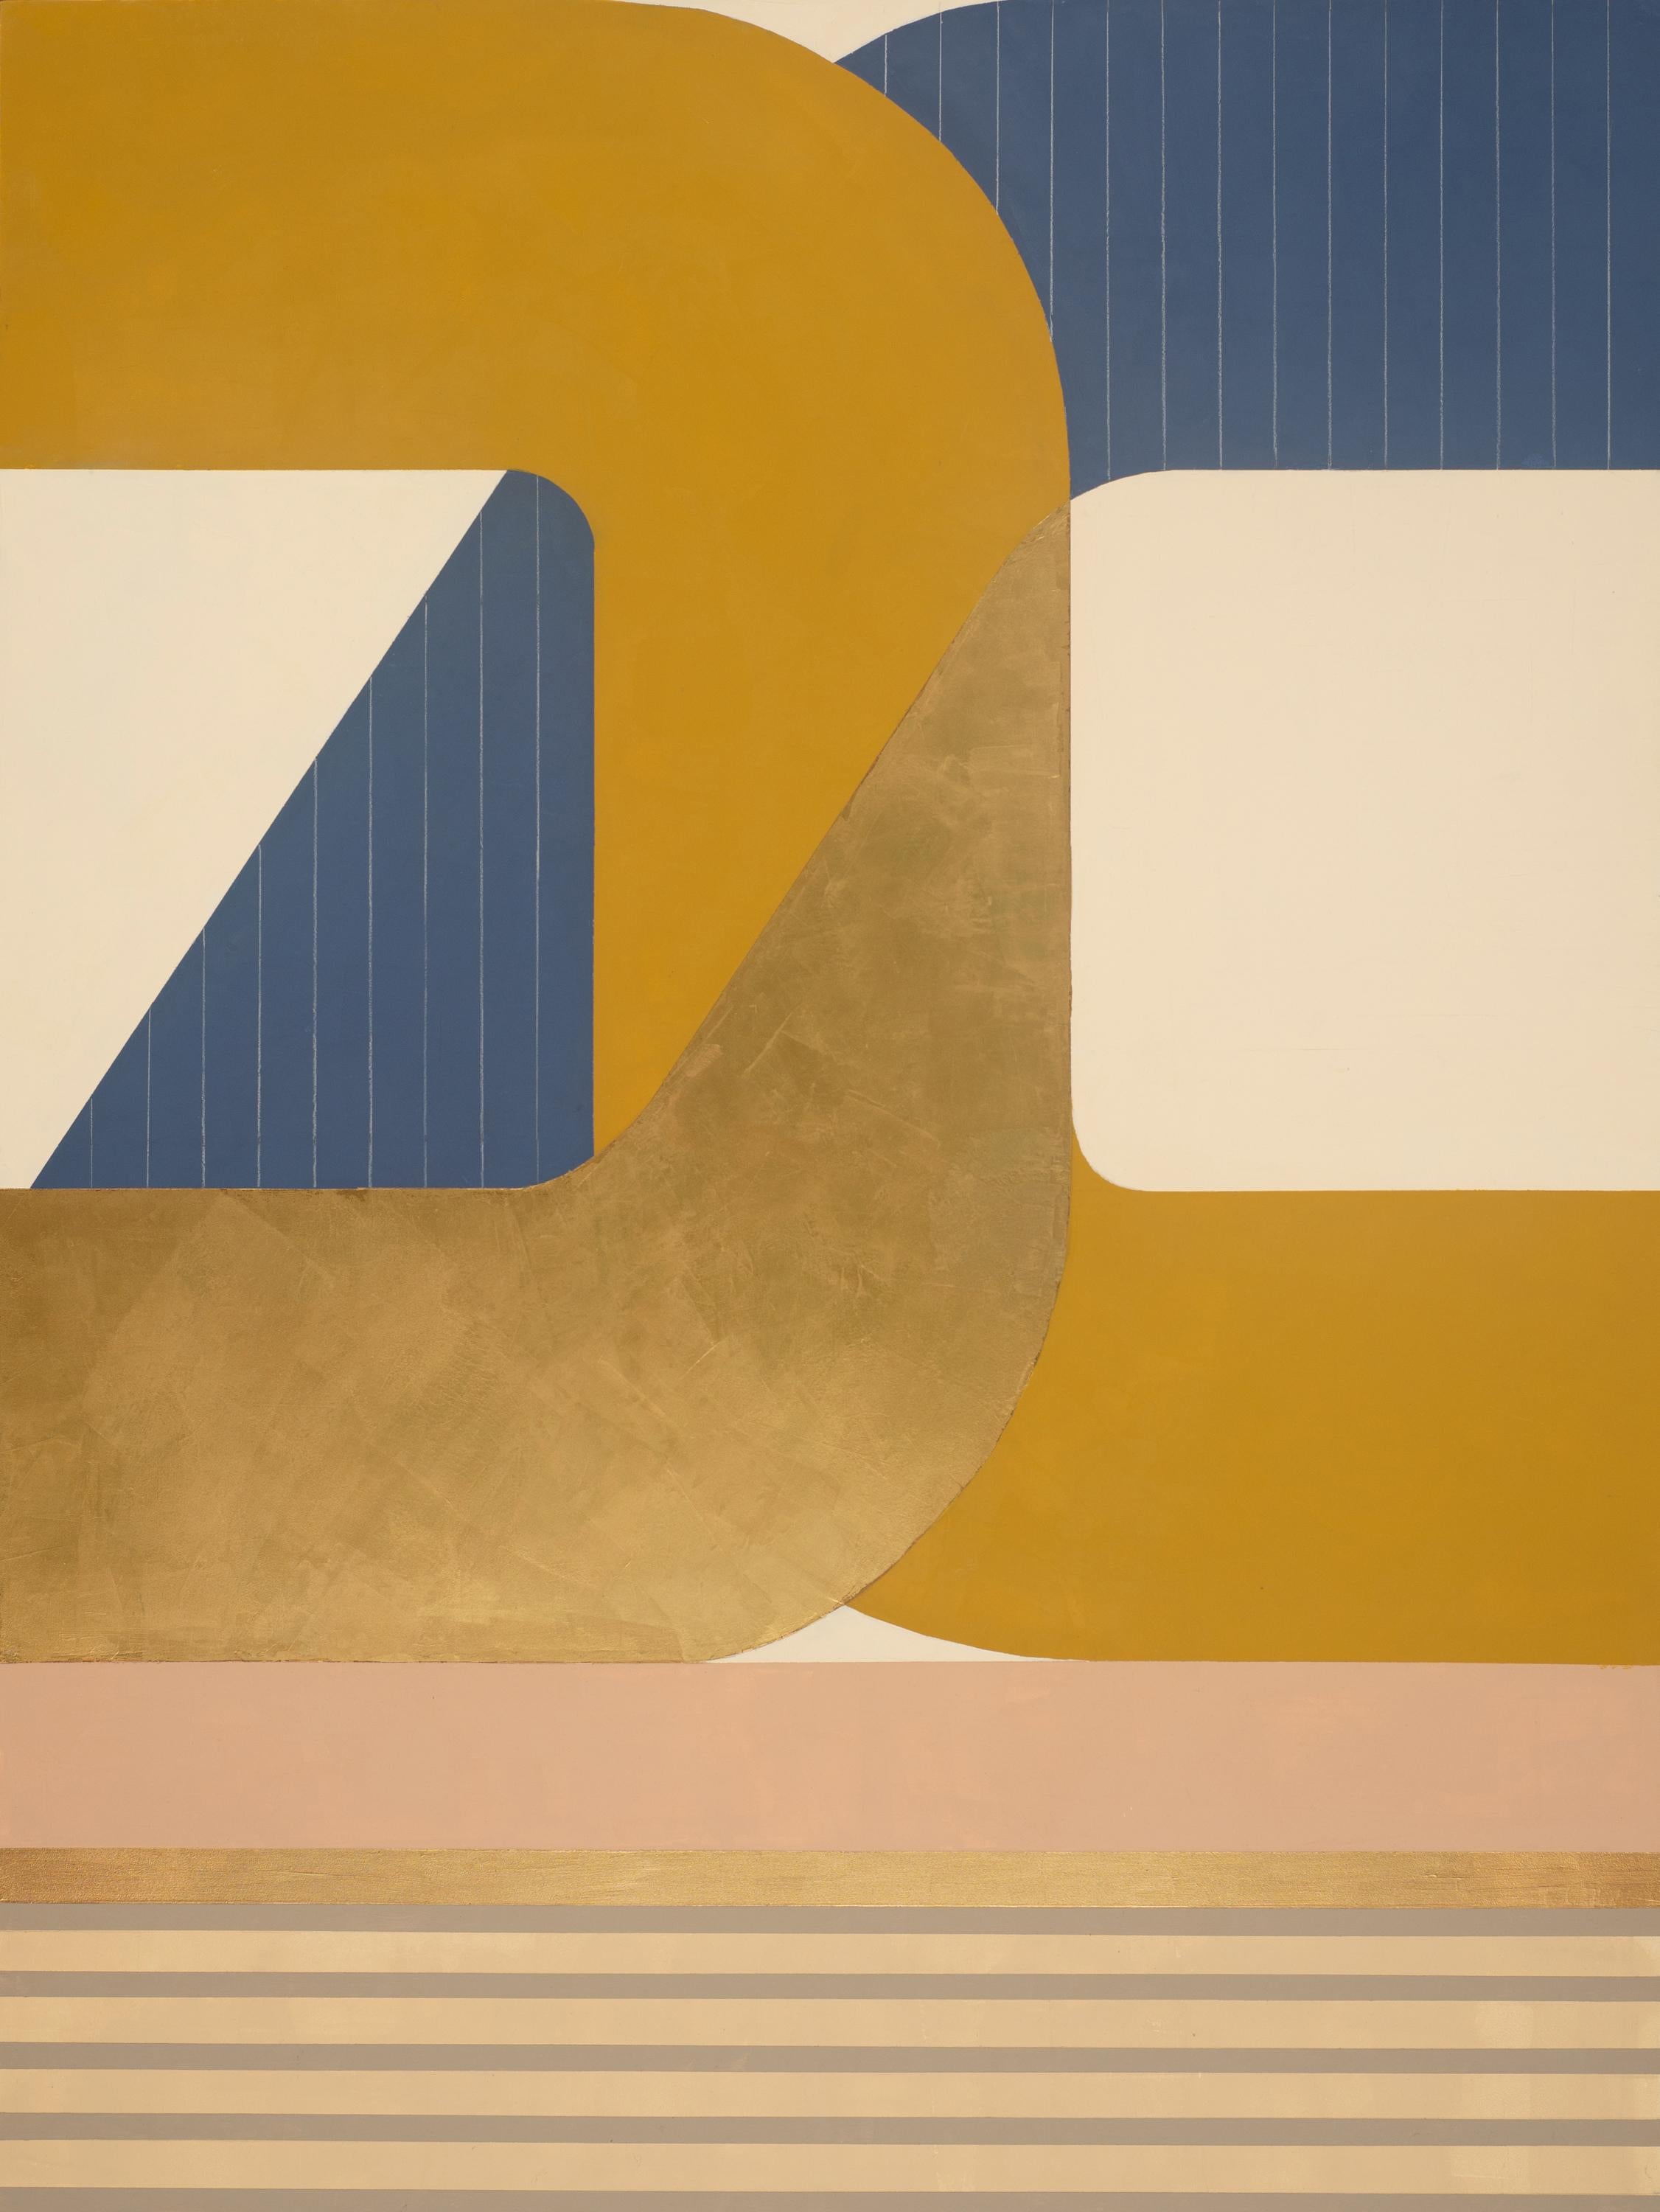 Kazaan Viveiros Abstract Painting - Paradigm Shift, striking modern geometric abstract painting, bright palette